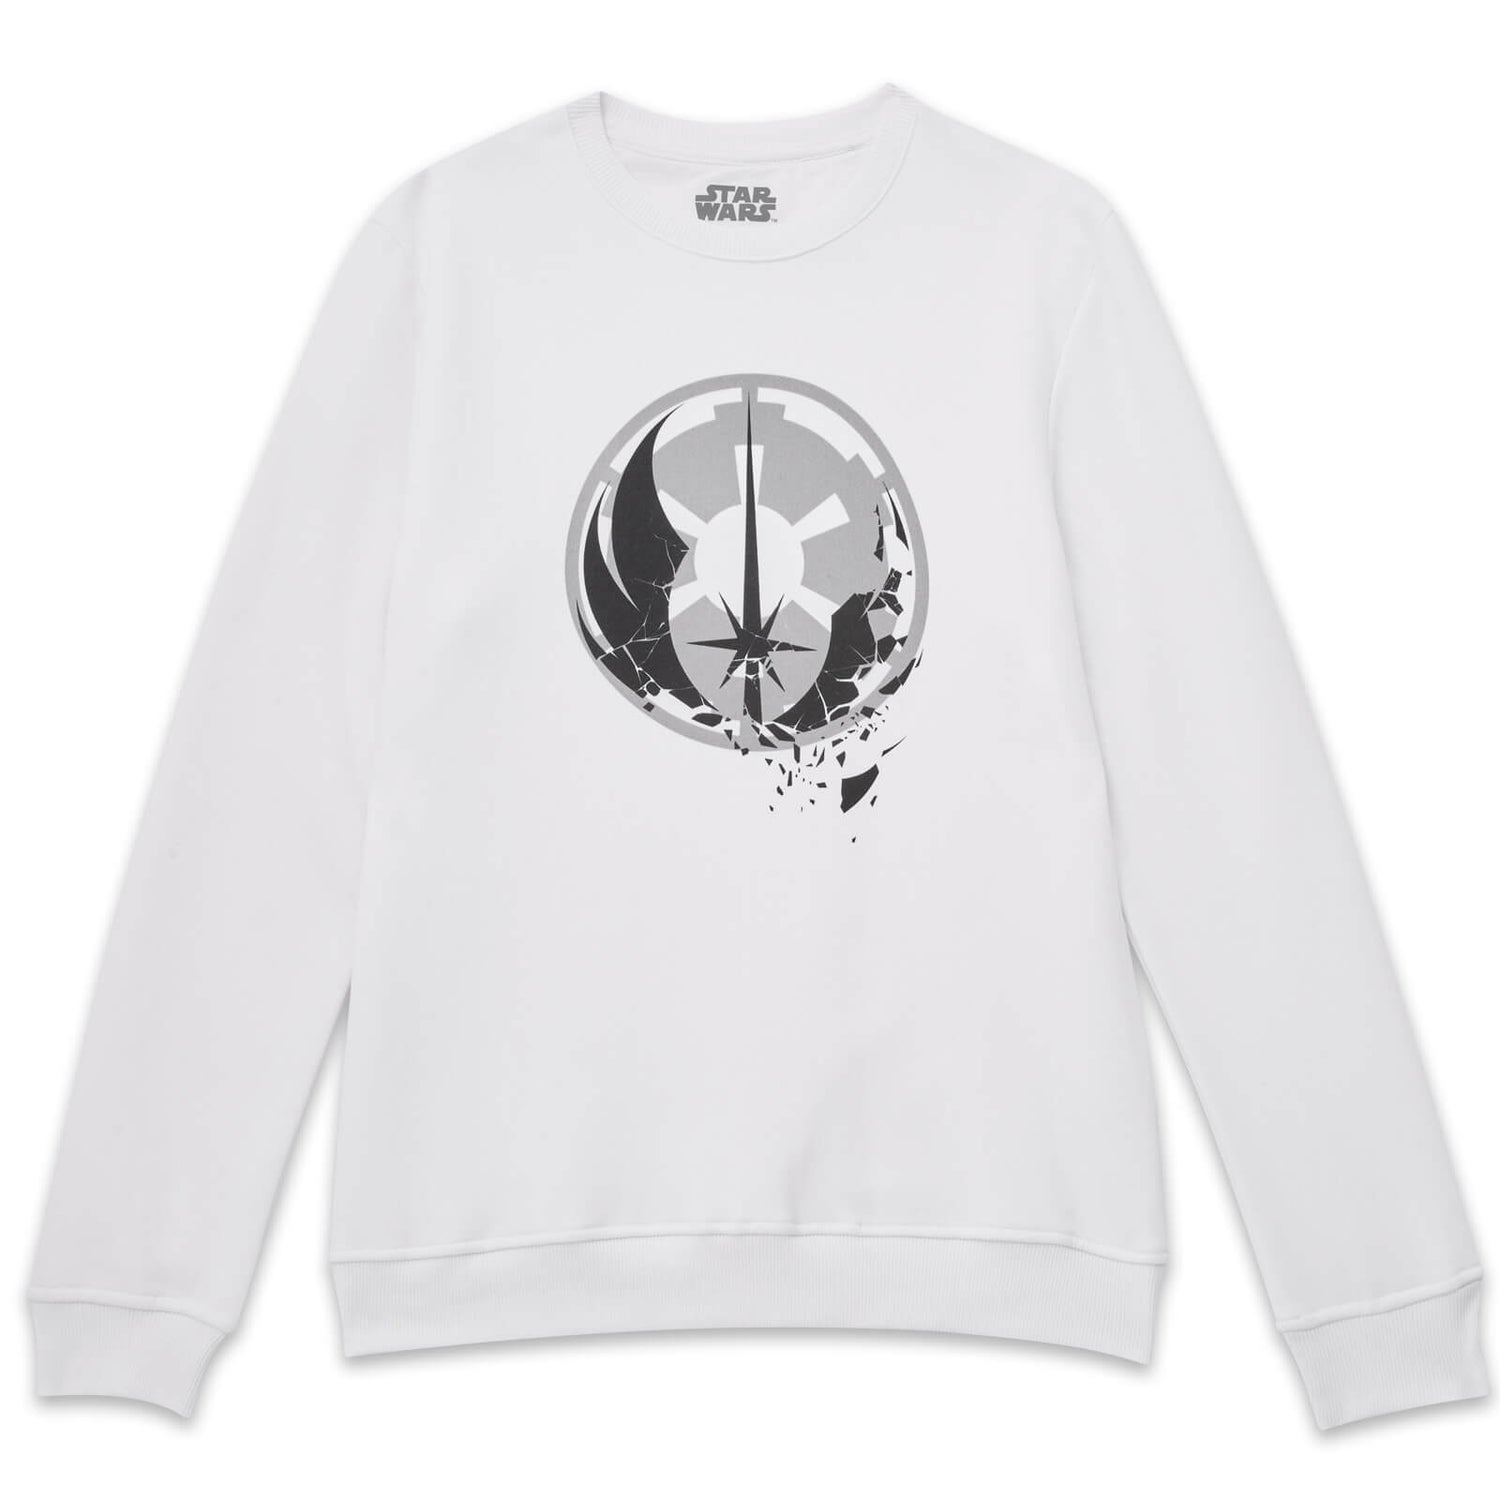 Star Wars Fractured Logos Sweatshirt - White